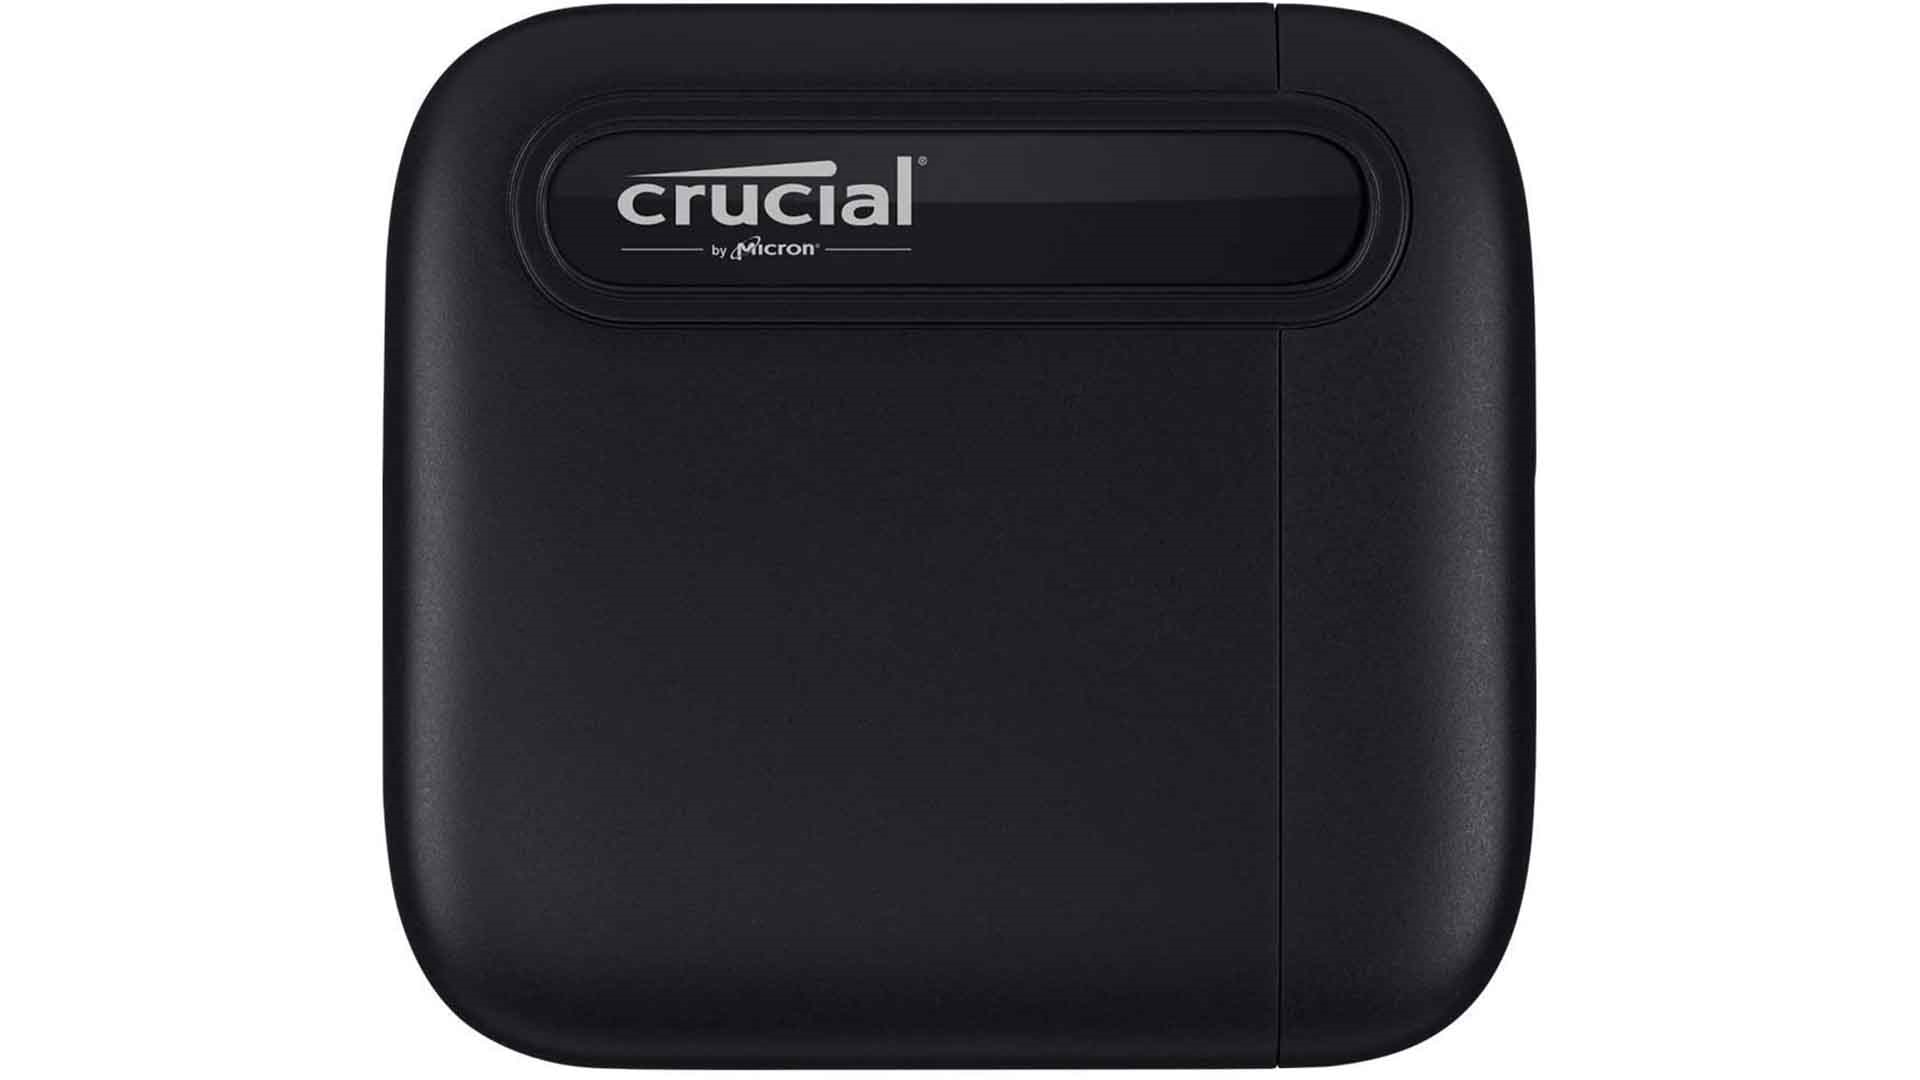 Crucial X6 portable SSD | DeviceDaily.com